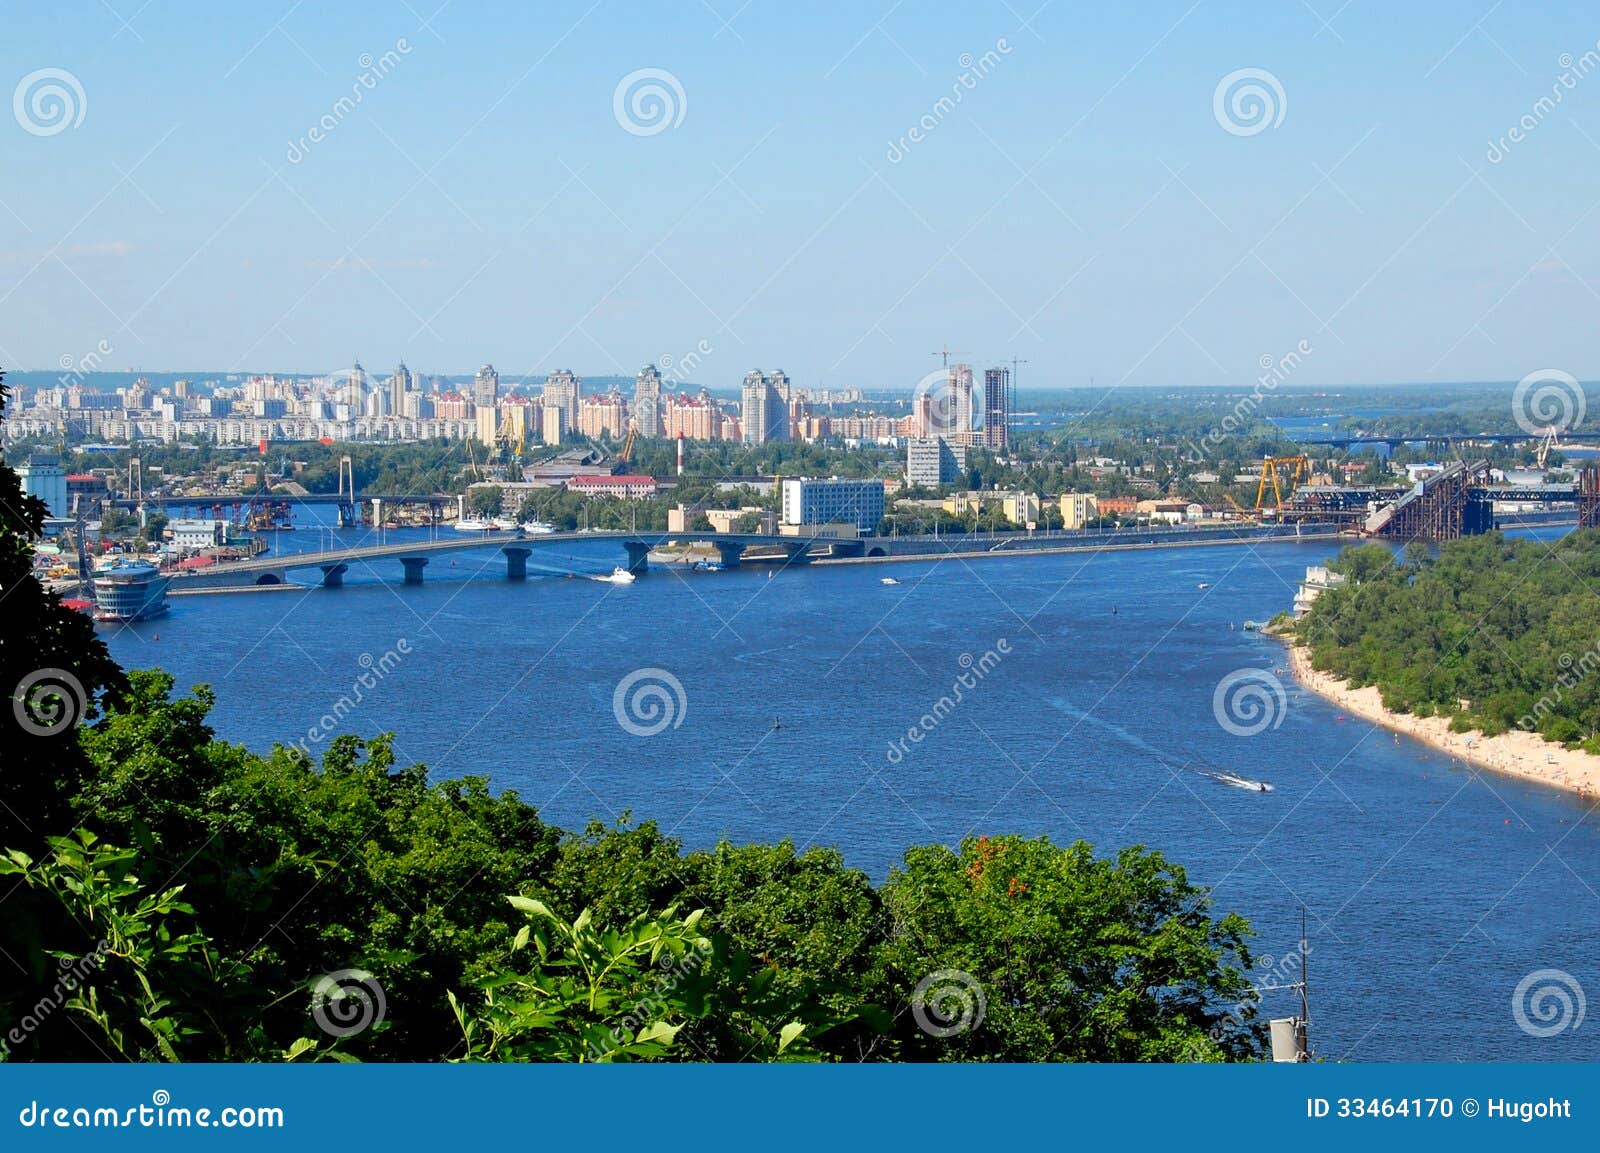 dnieper river, kiev ukraine